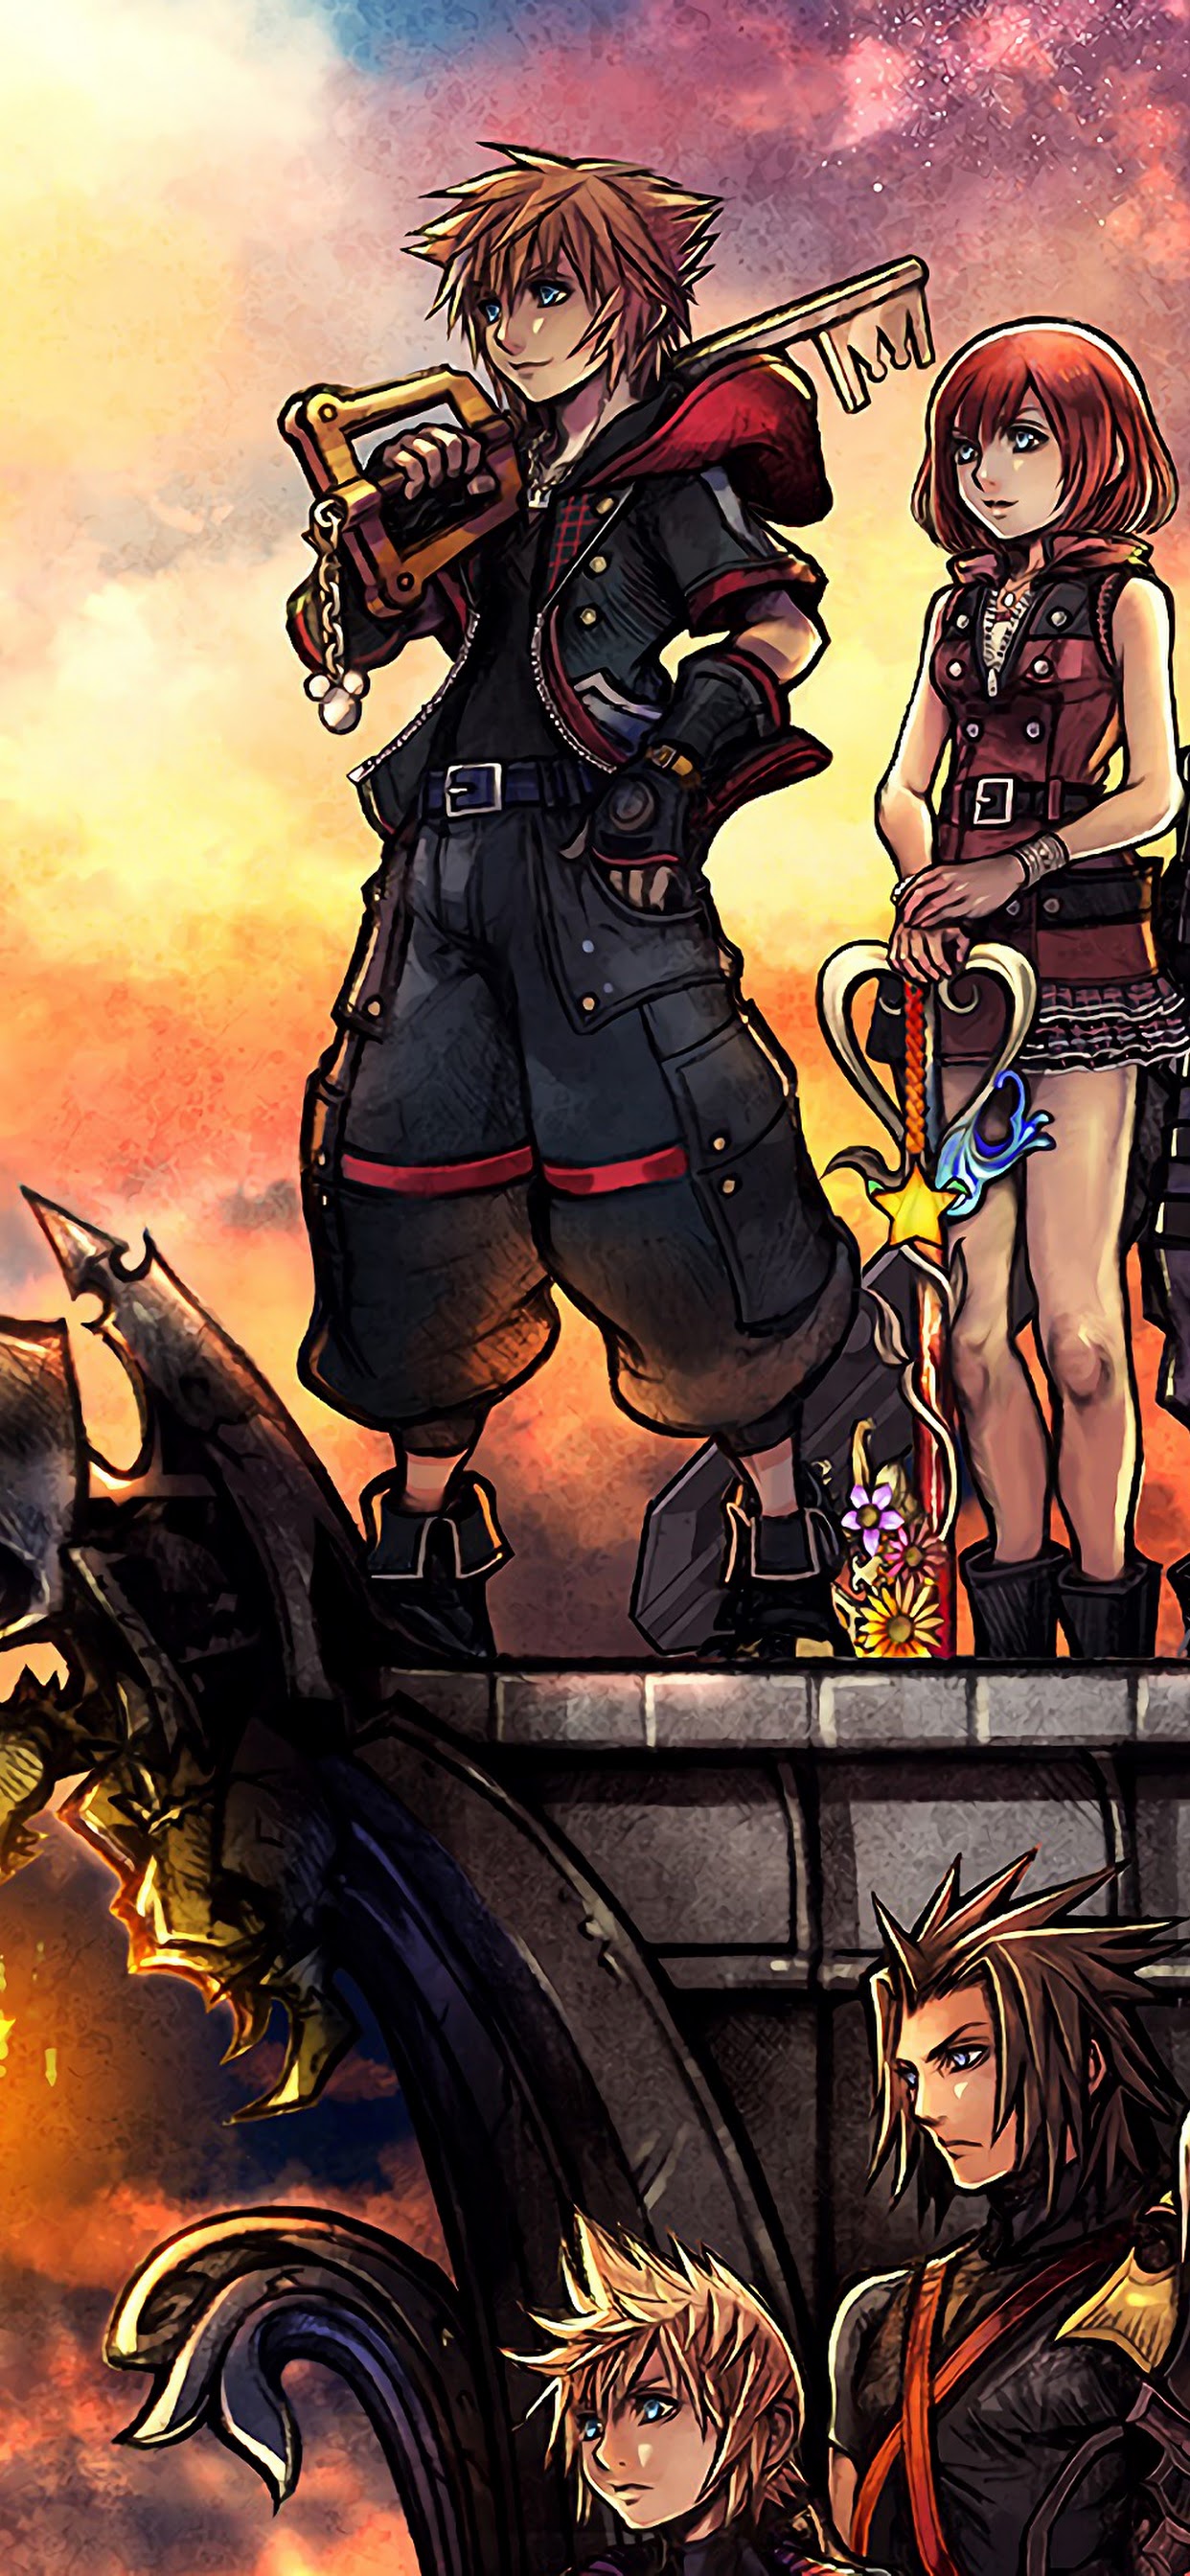 Kingdom Hearts 3 Characters 4k 3840x2160 Wallpaper 12